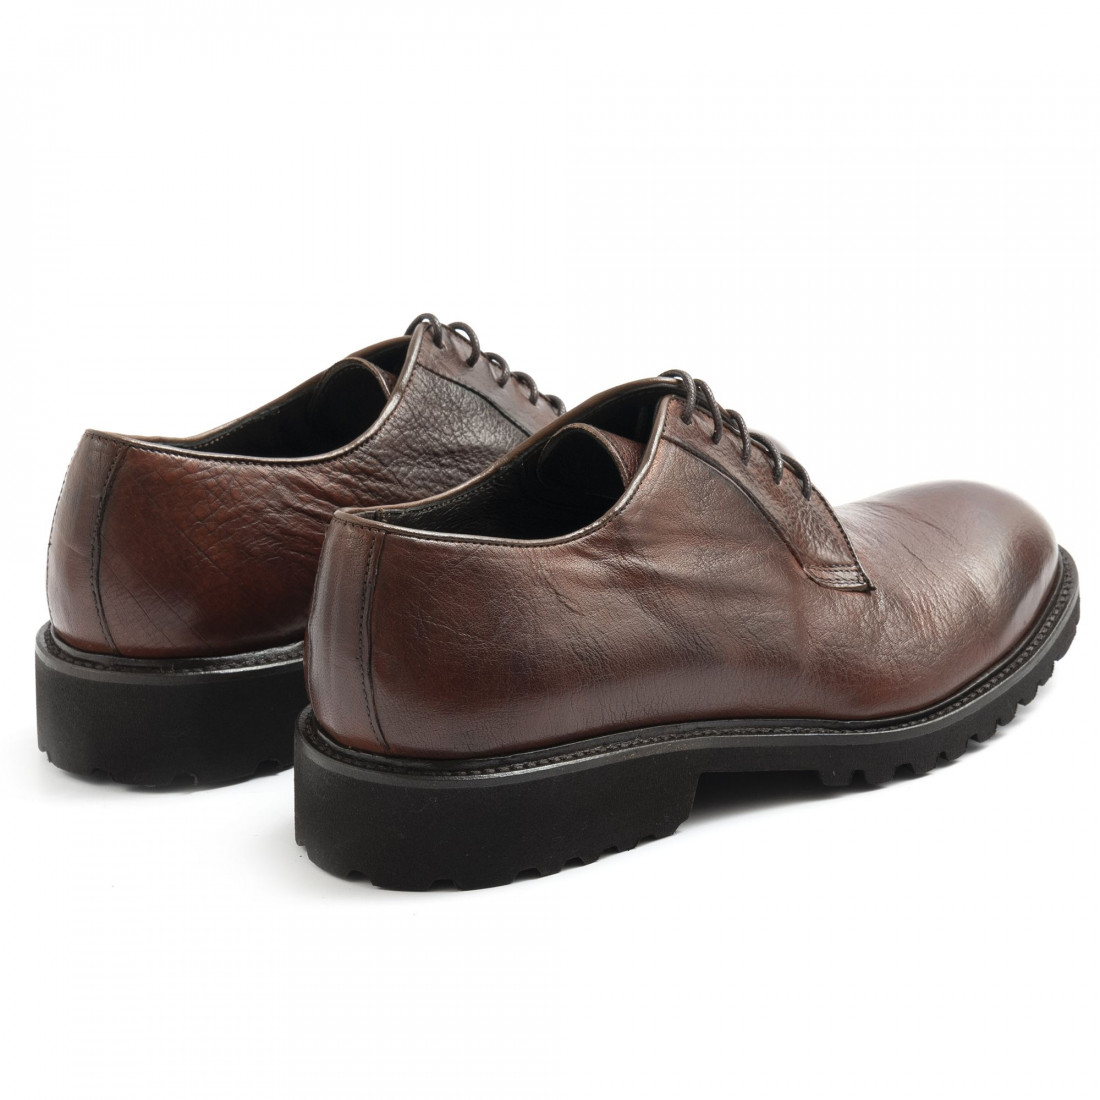 Men's Sangiorgio lace un shoes in brown soft leather